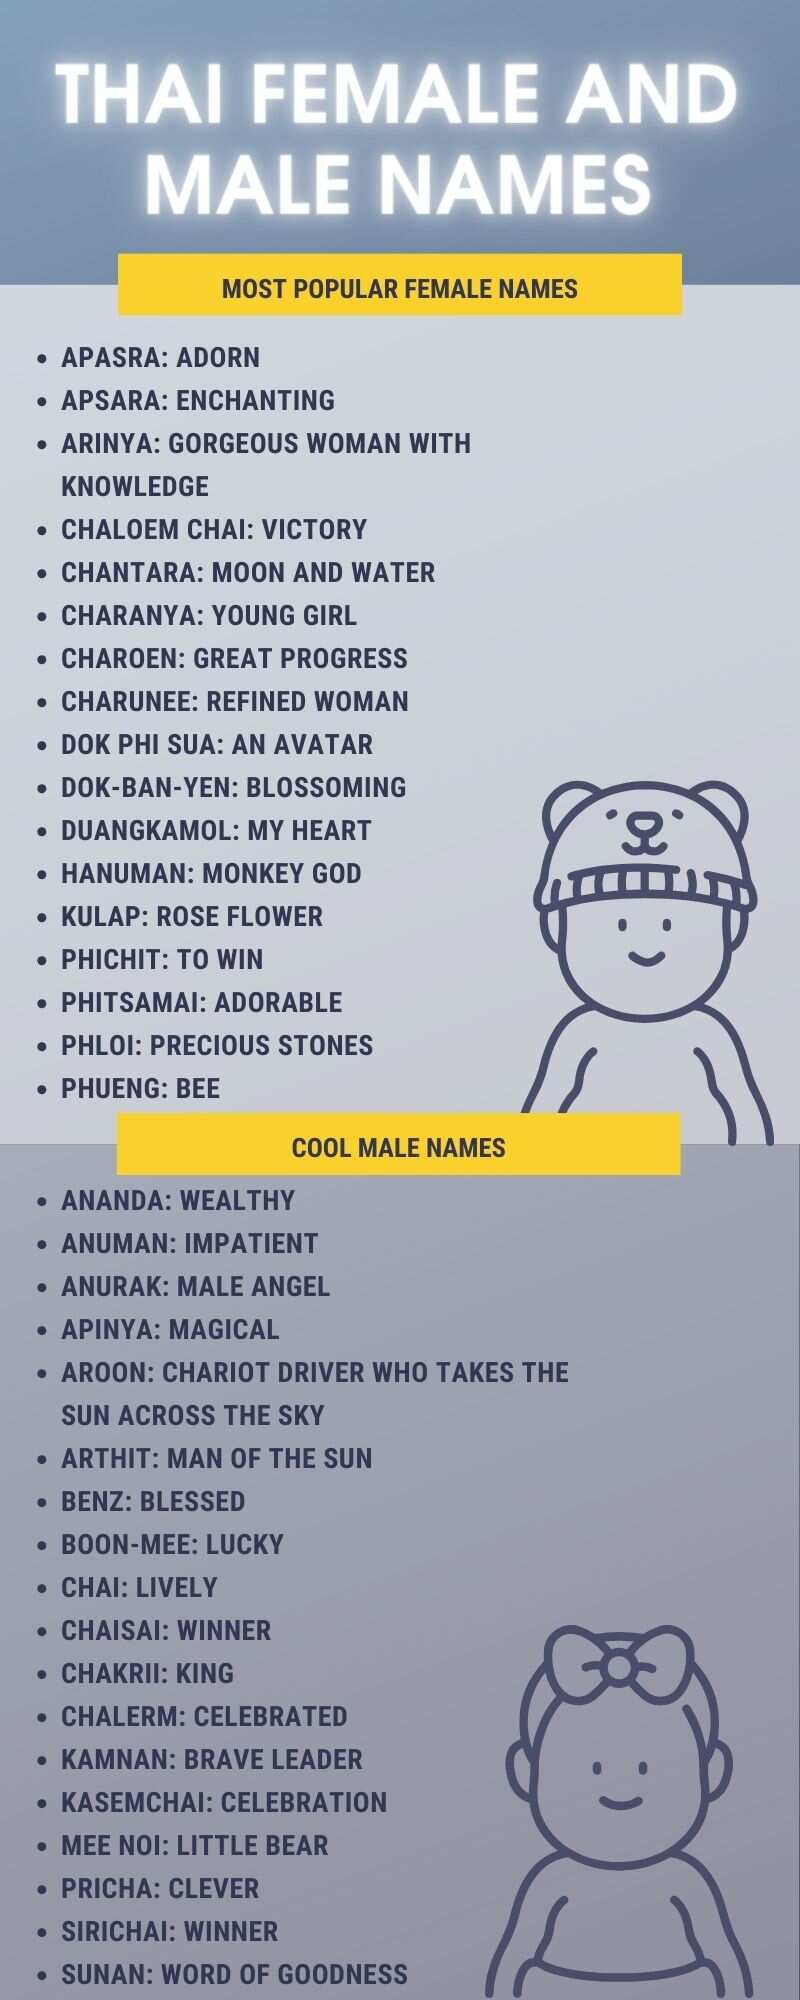 Thai female and male names